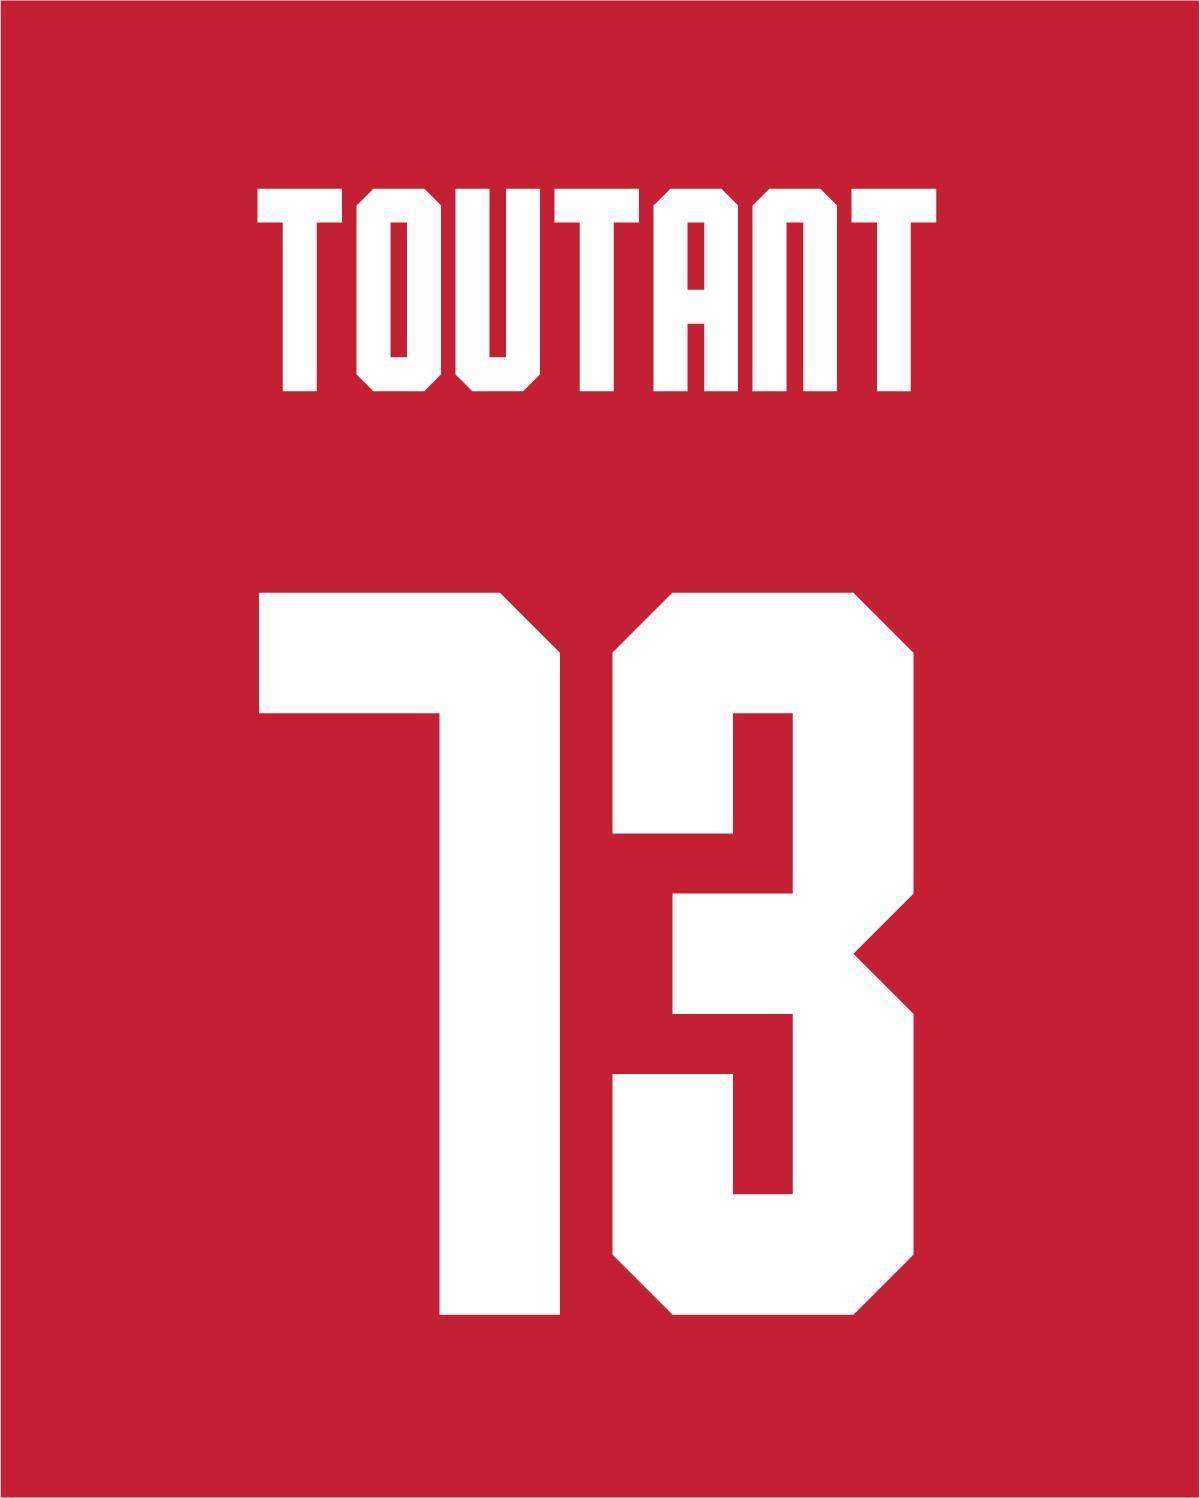 Grant Toutant | #73